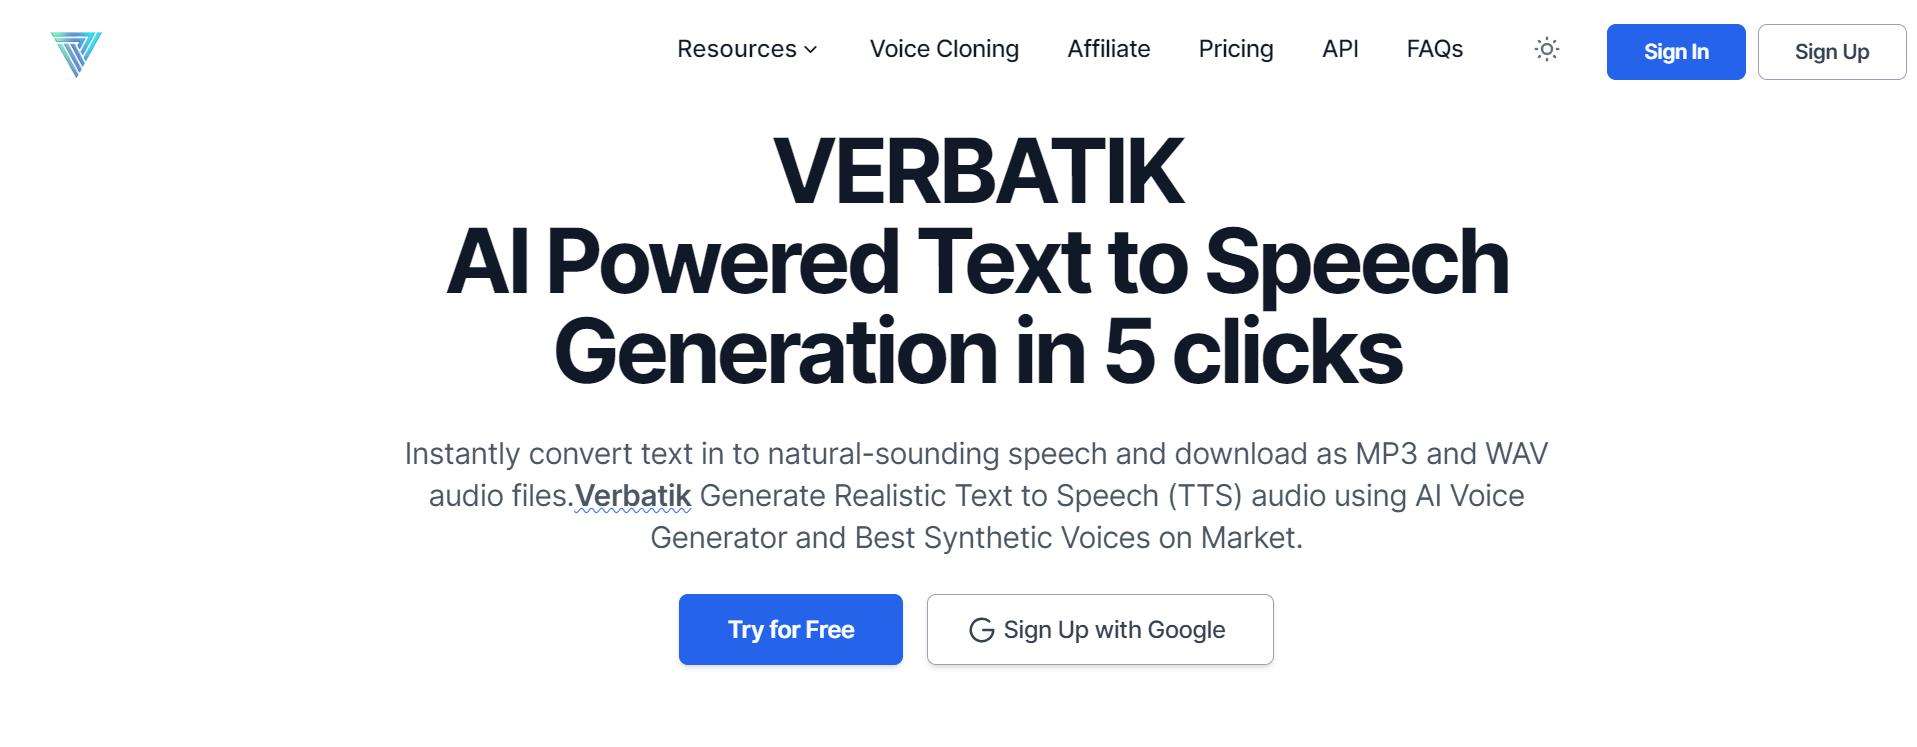 verbatik free text to speech maker